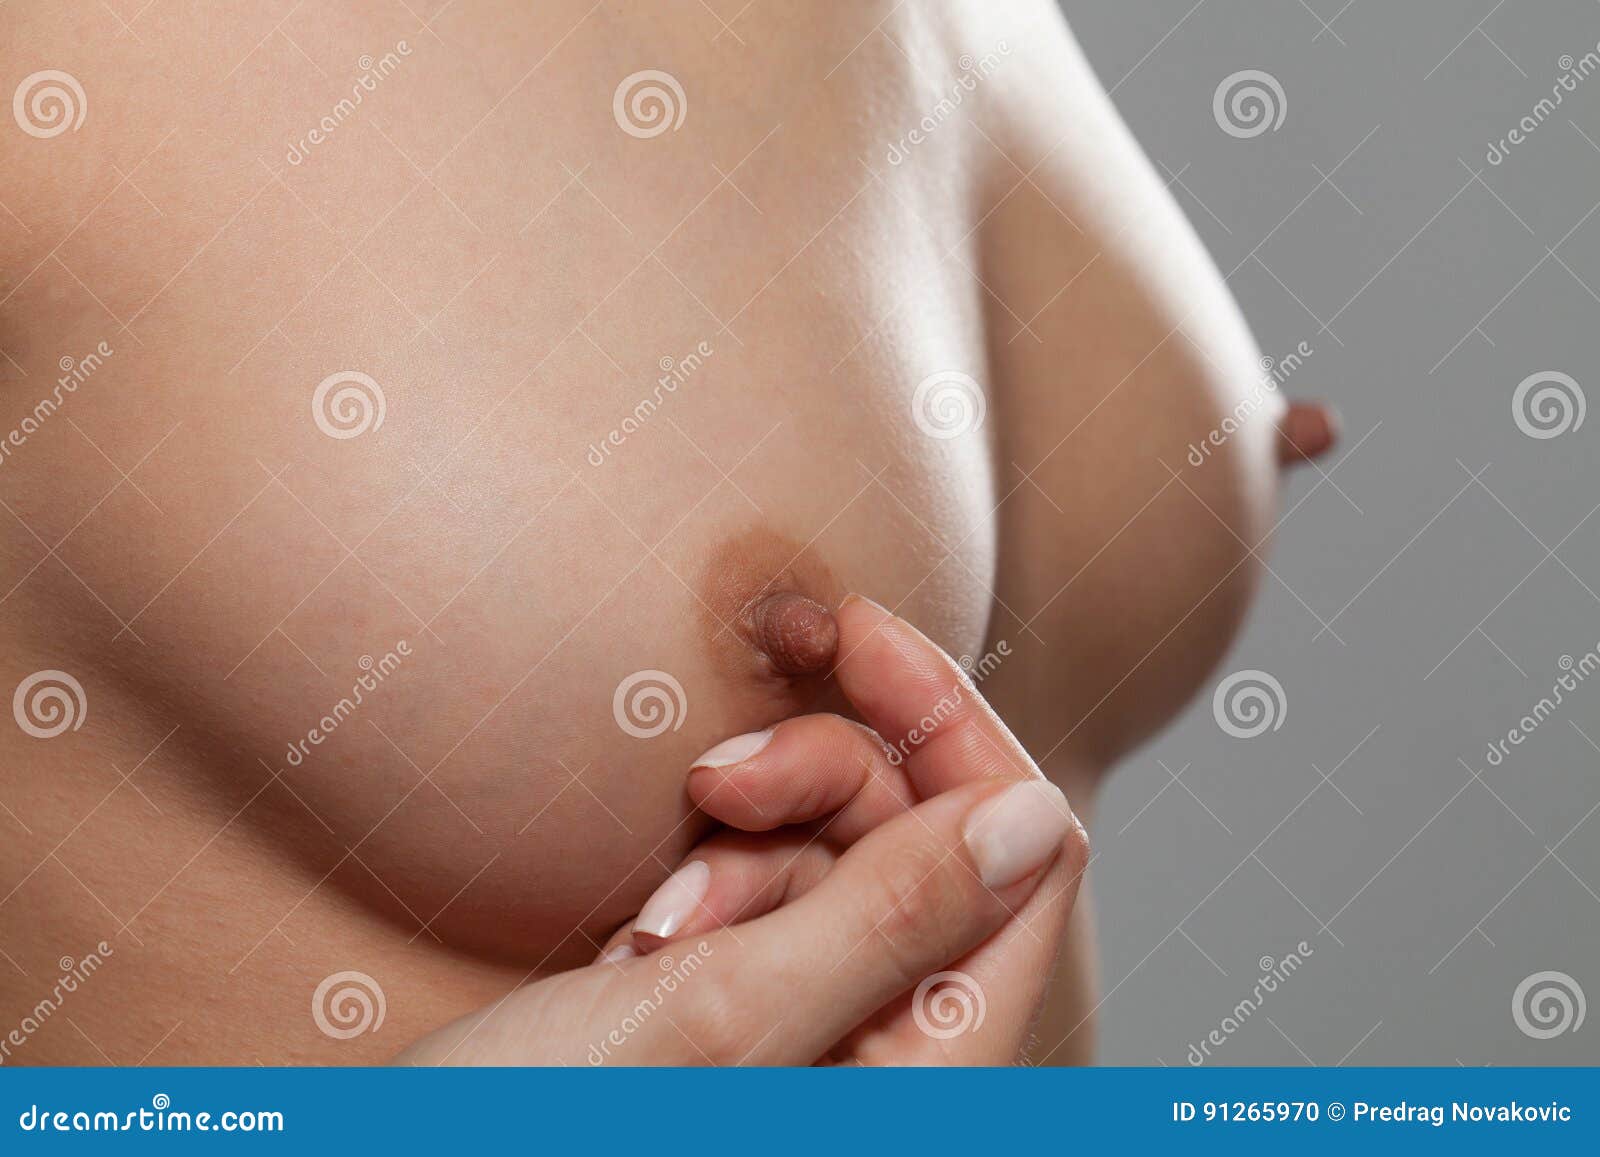 large nipple photos